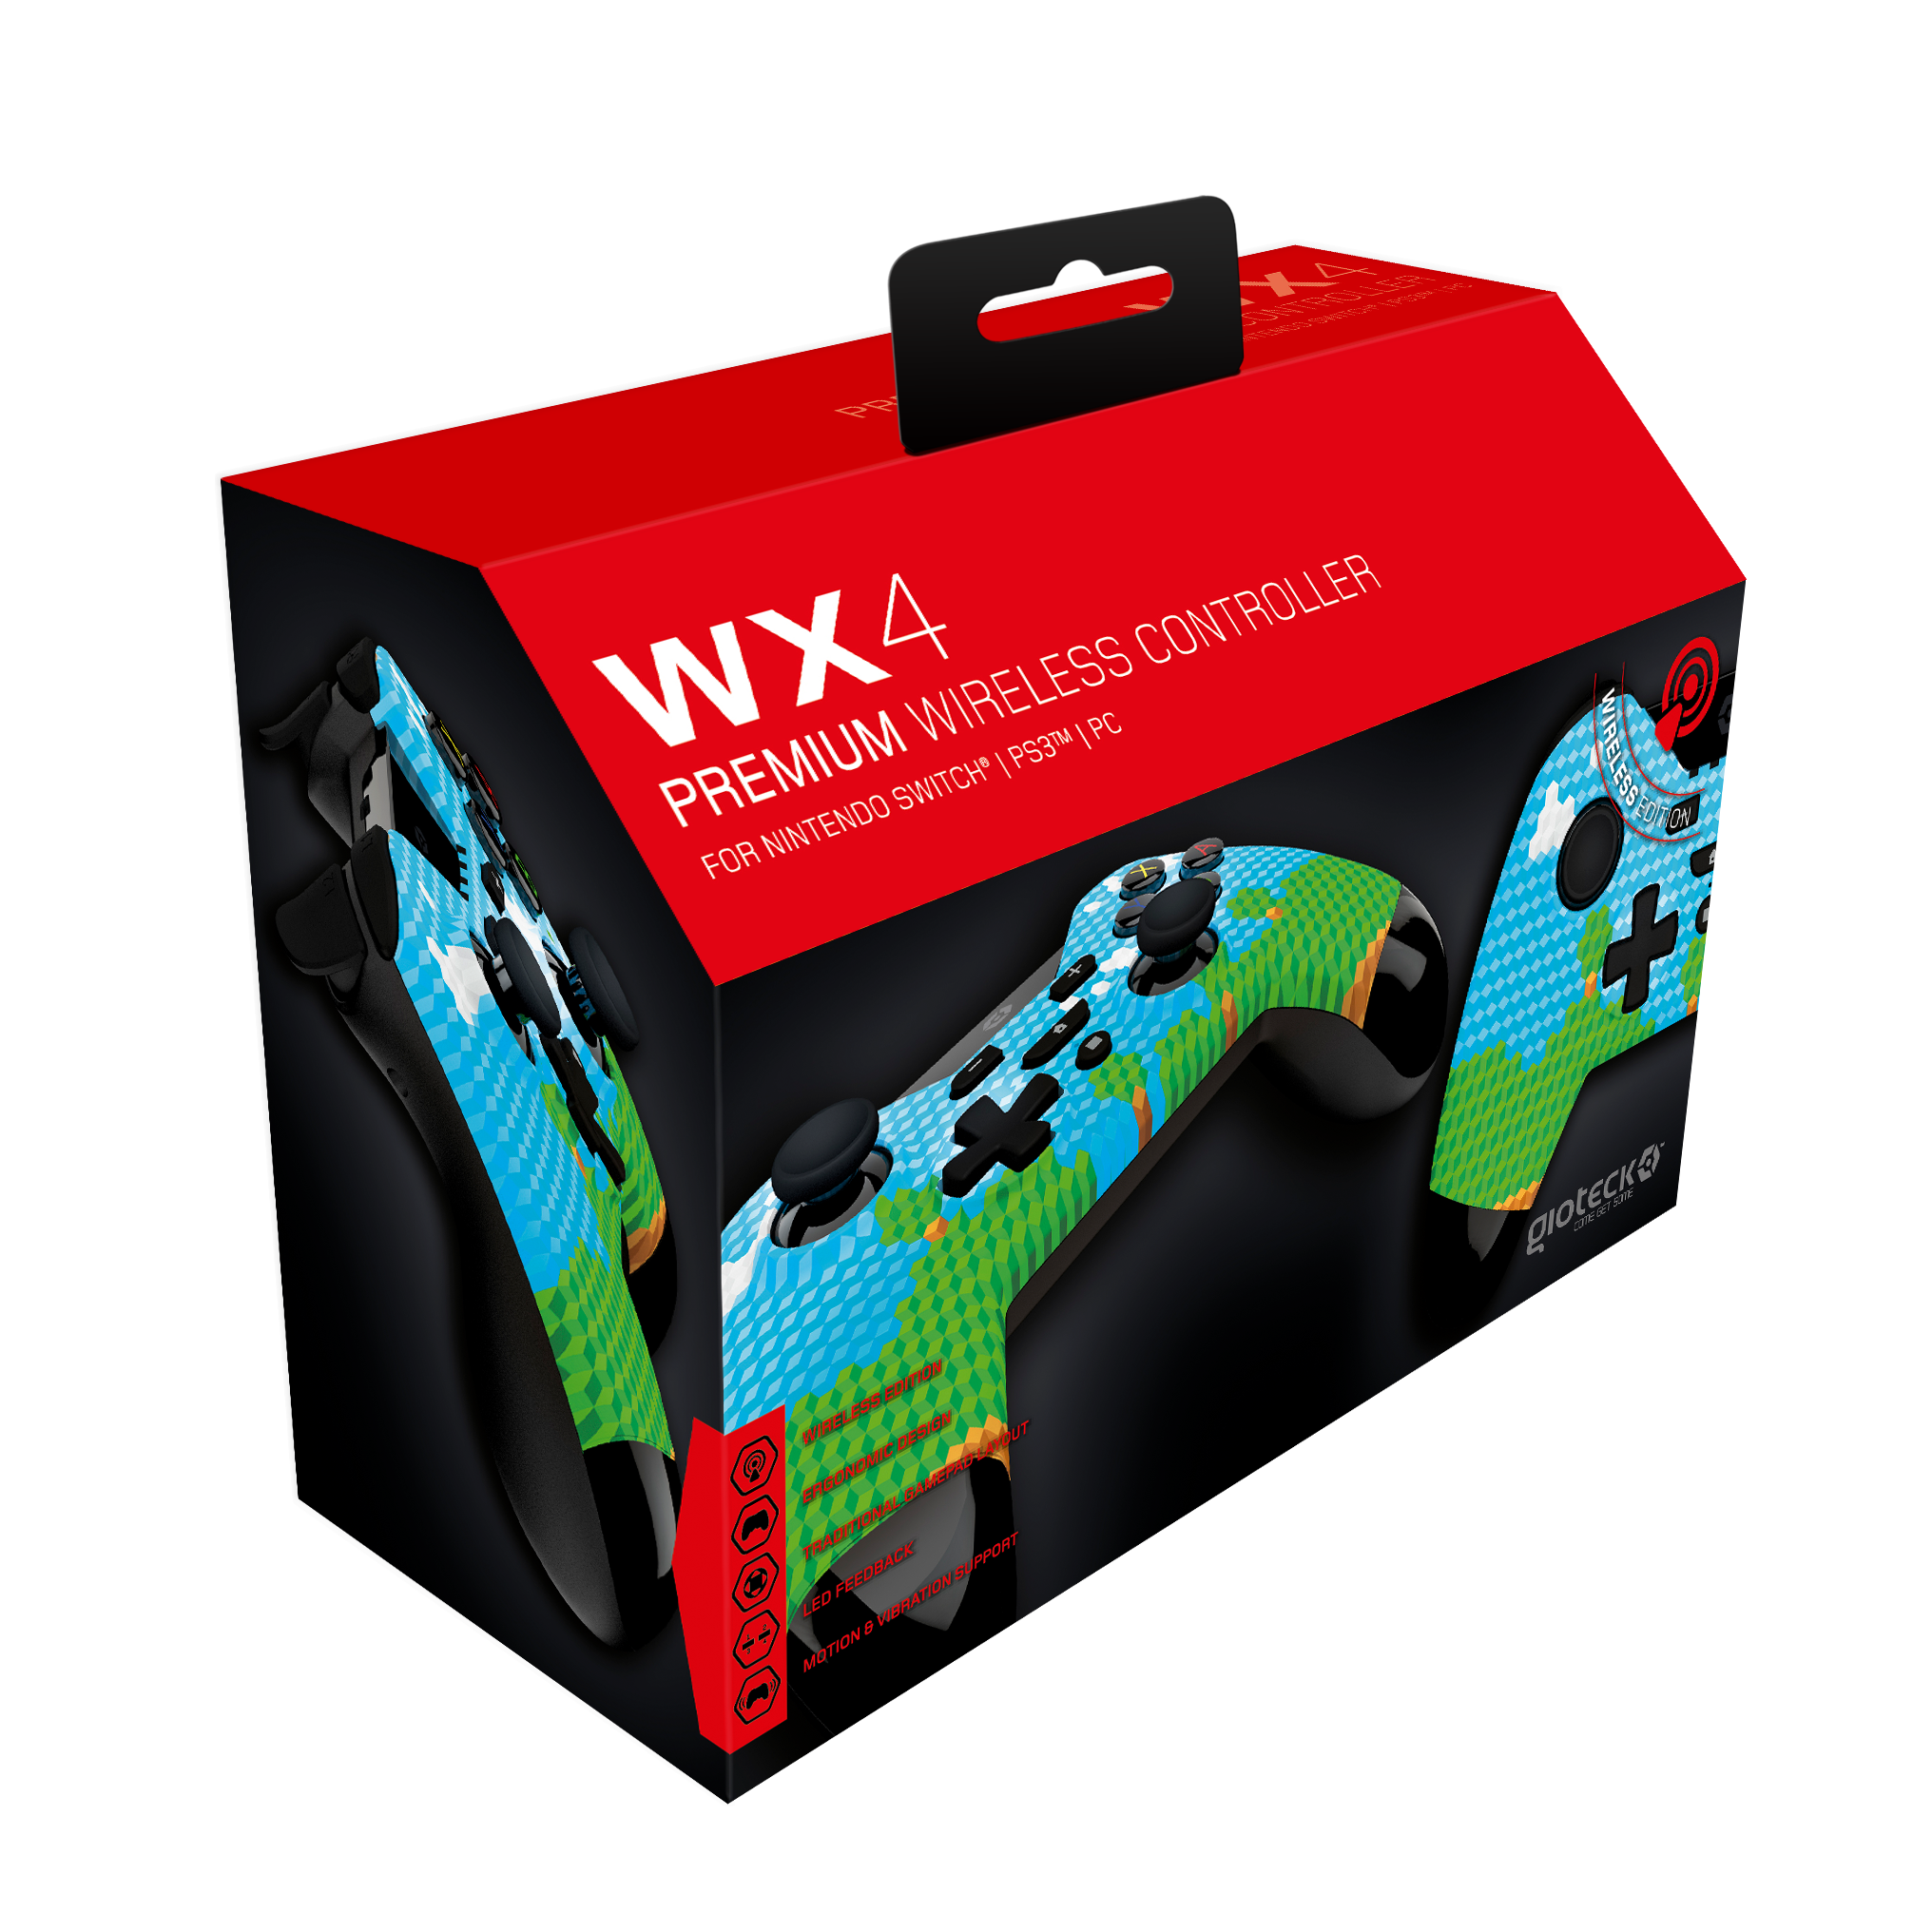 wx4 premium wireless controller